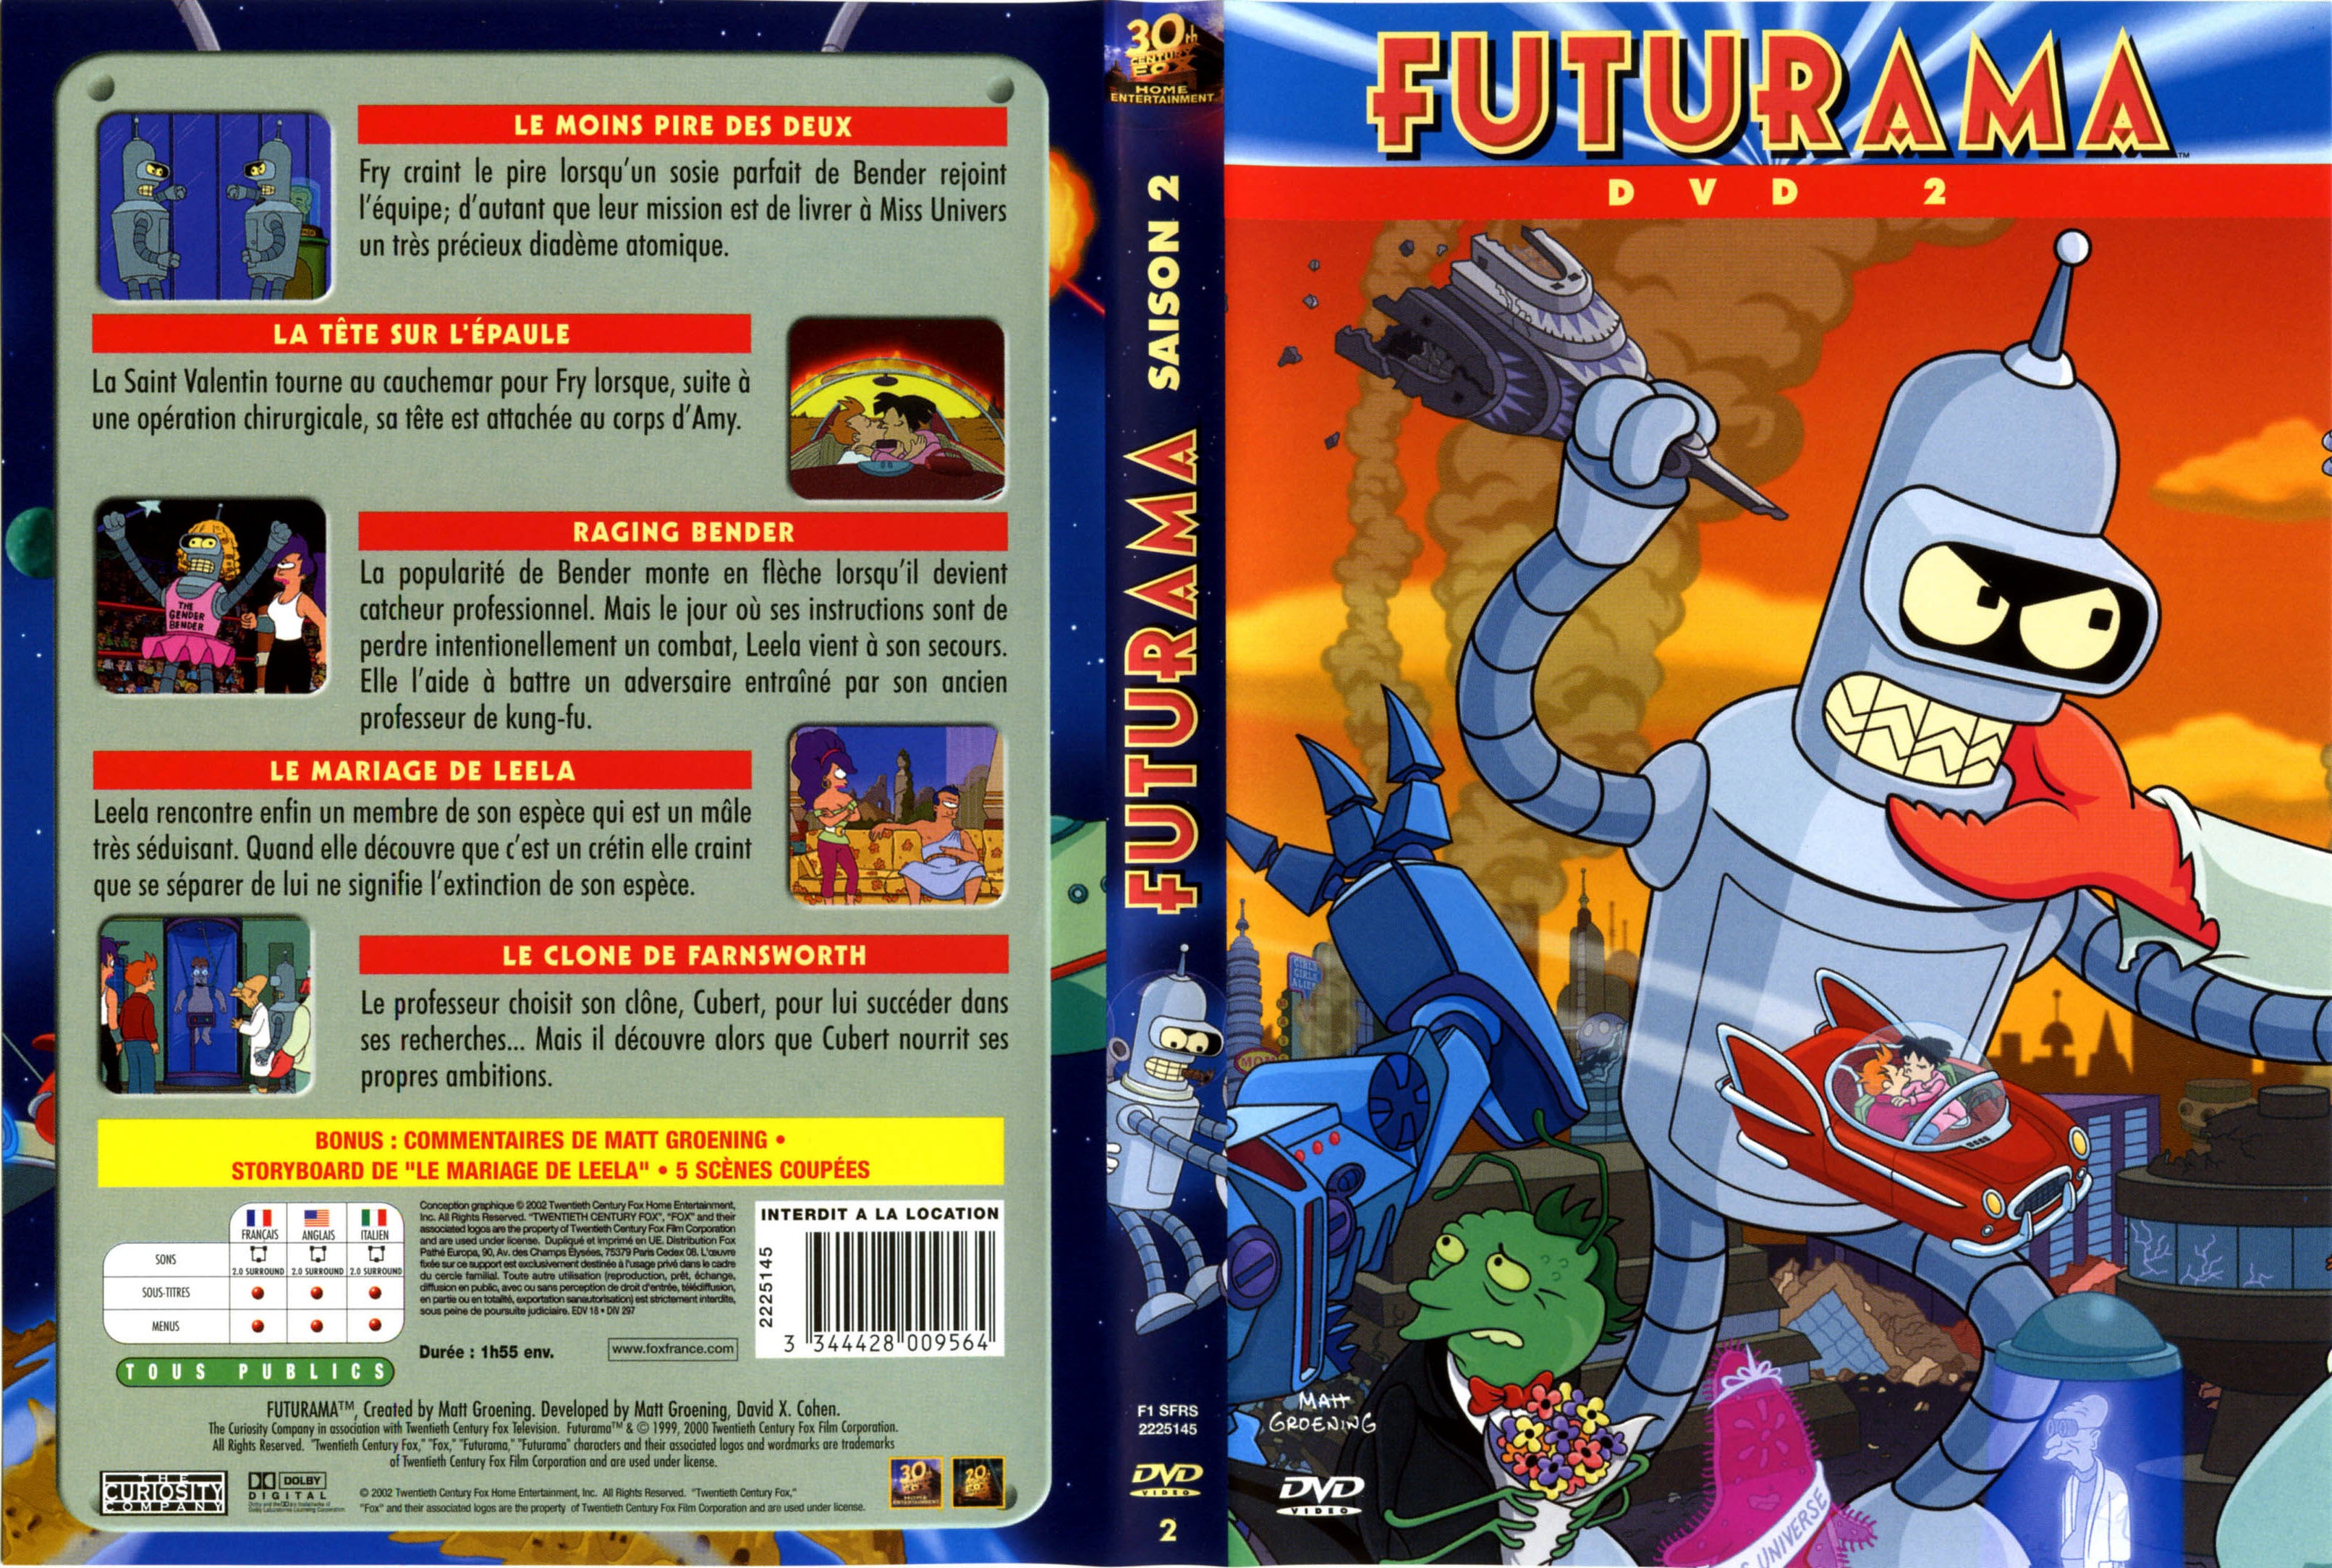 Jaquette DVD Futurama saison 2 DVD 2